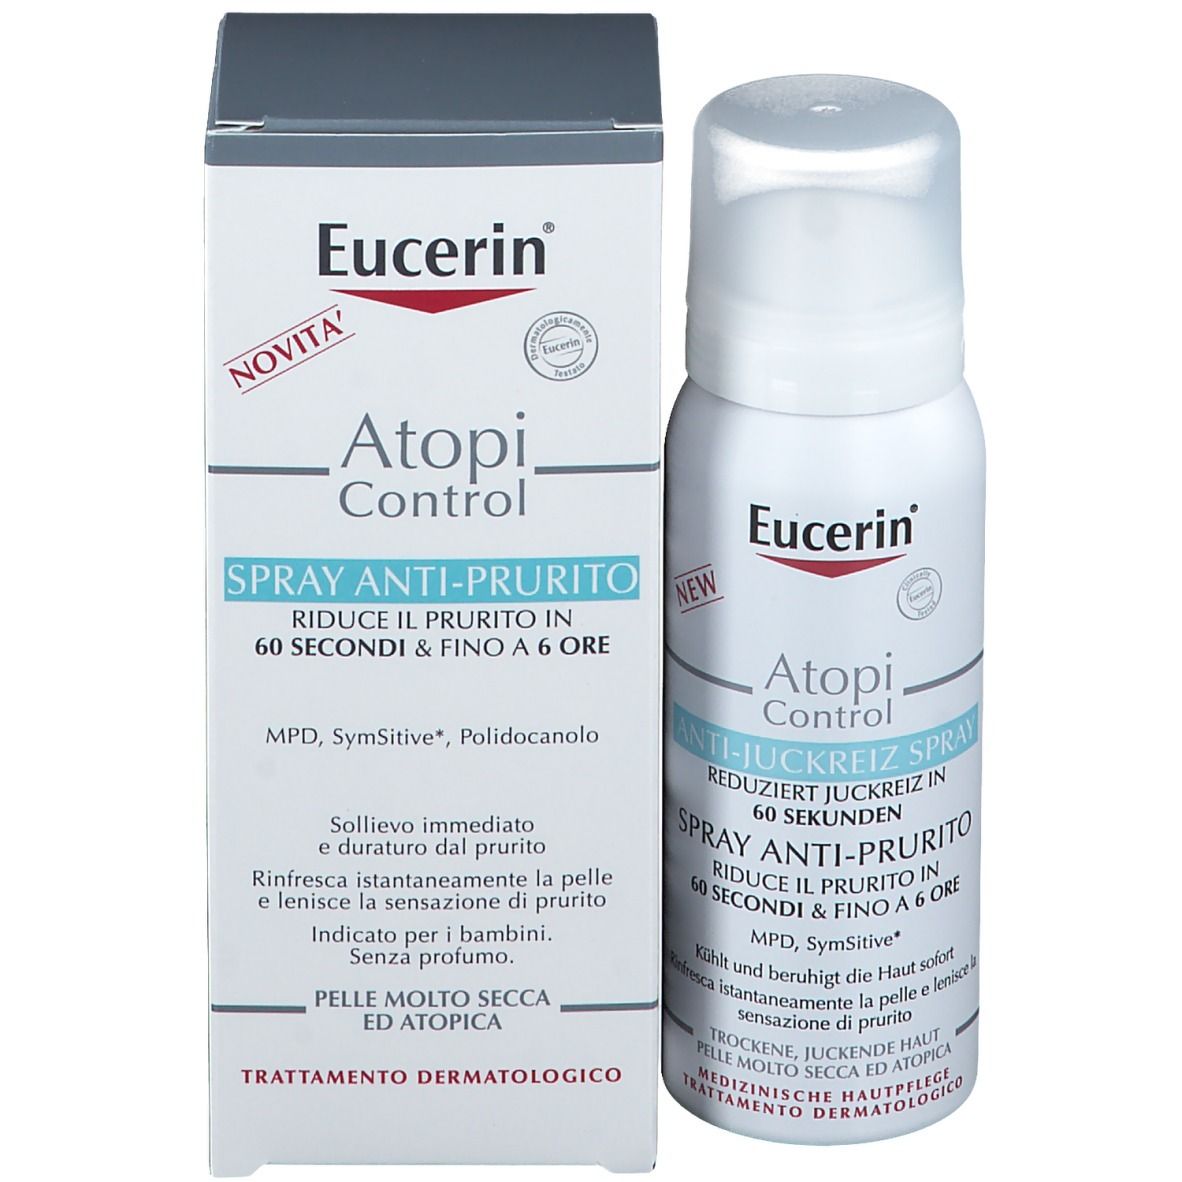 Eucerin atopicontrol